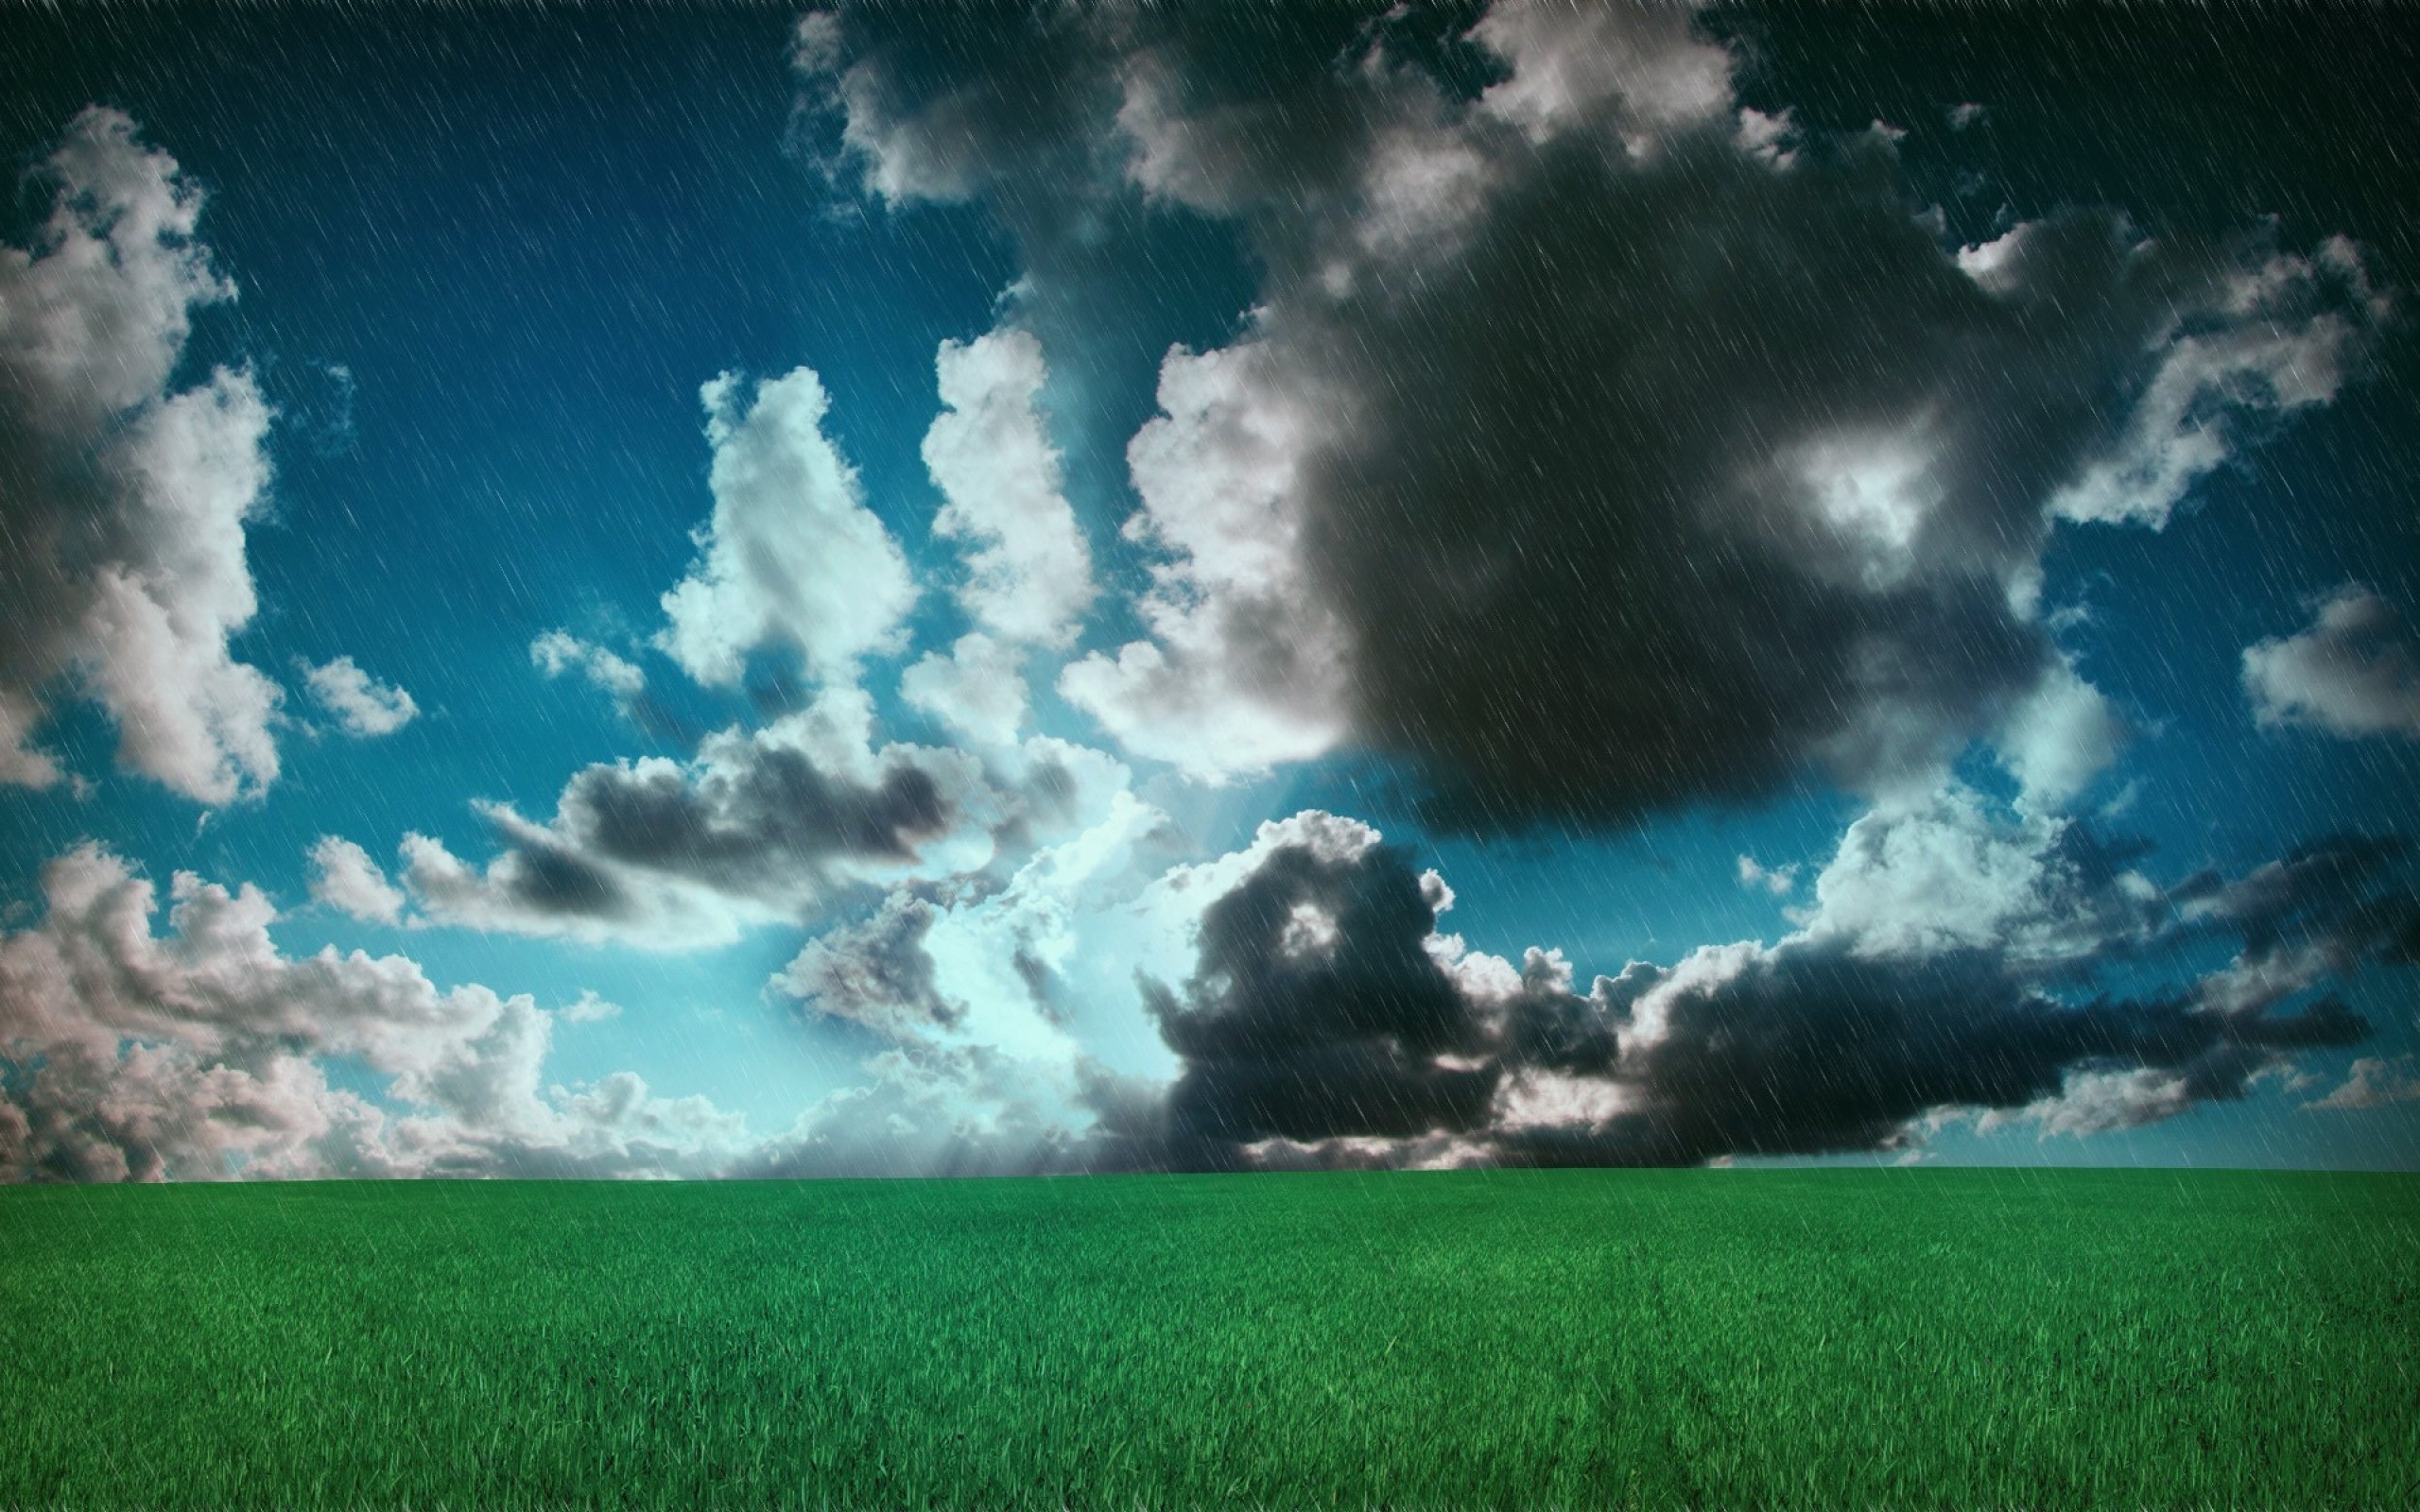 720611-spring-rain-storm-drops-landscape-nature-sky-clouds-mood.jpg